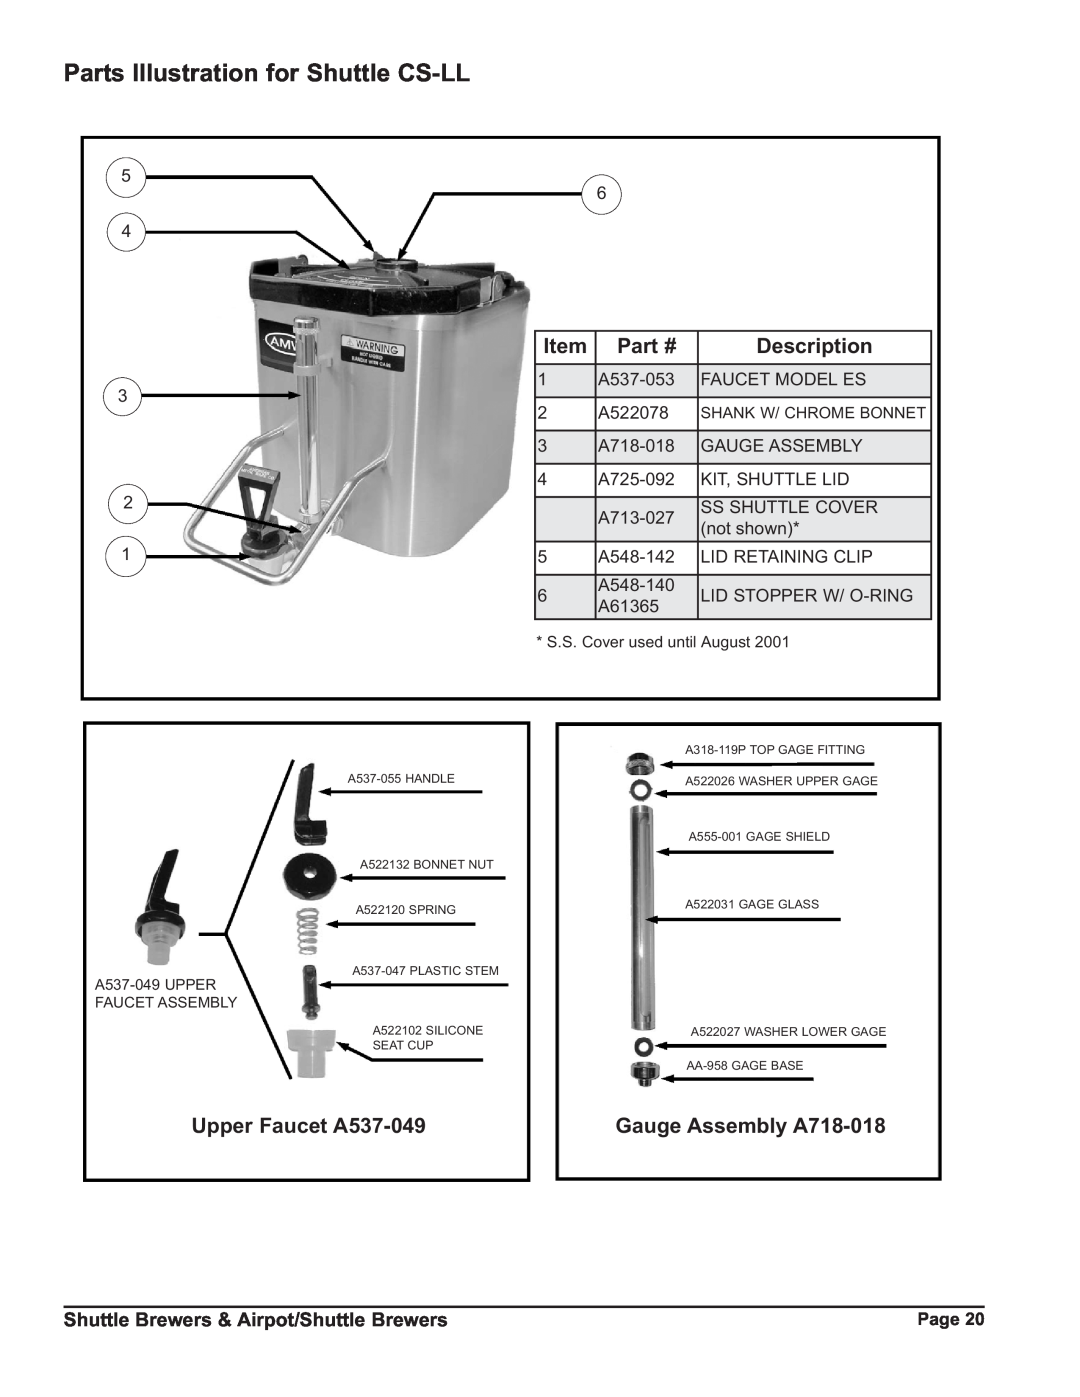 Grindmaster P400ESHP Parts Illustration for Shuttle CS-LL, Upper Faucet A537-049, Gauge Assembly A718-018, Description 